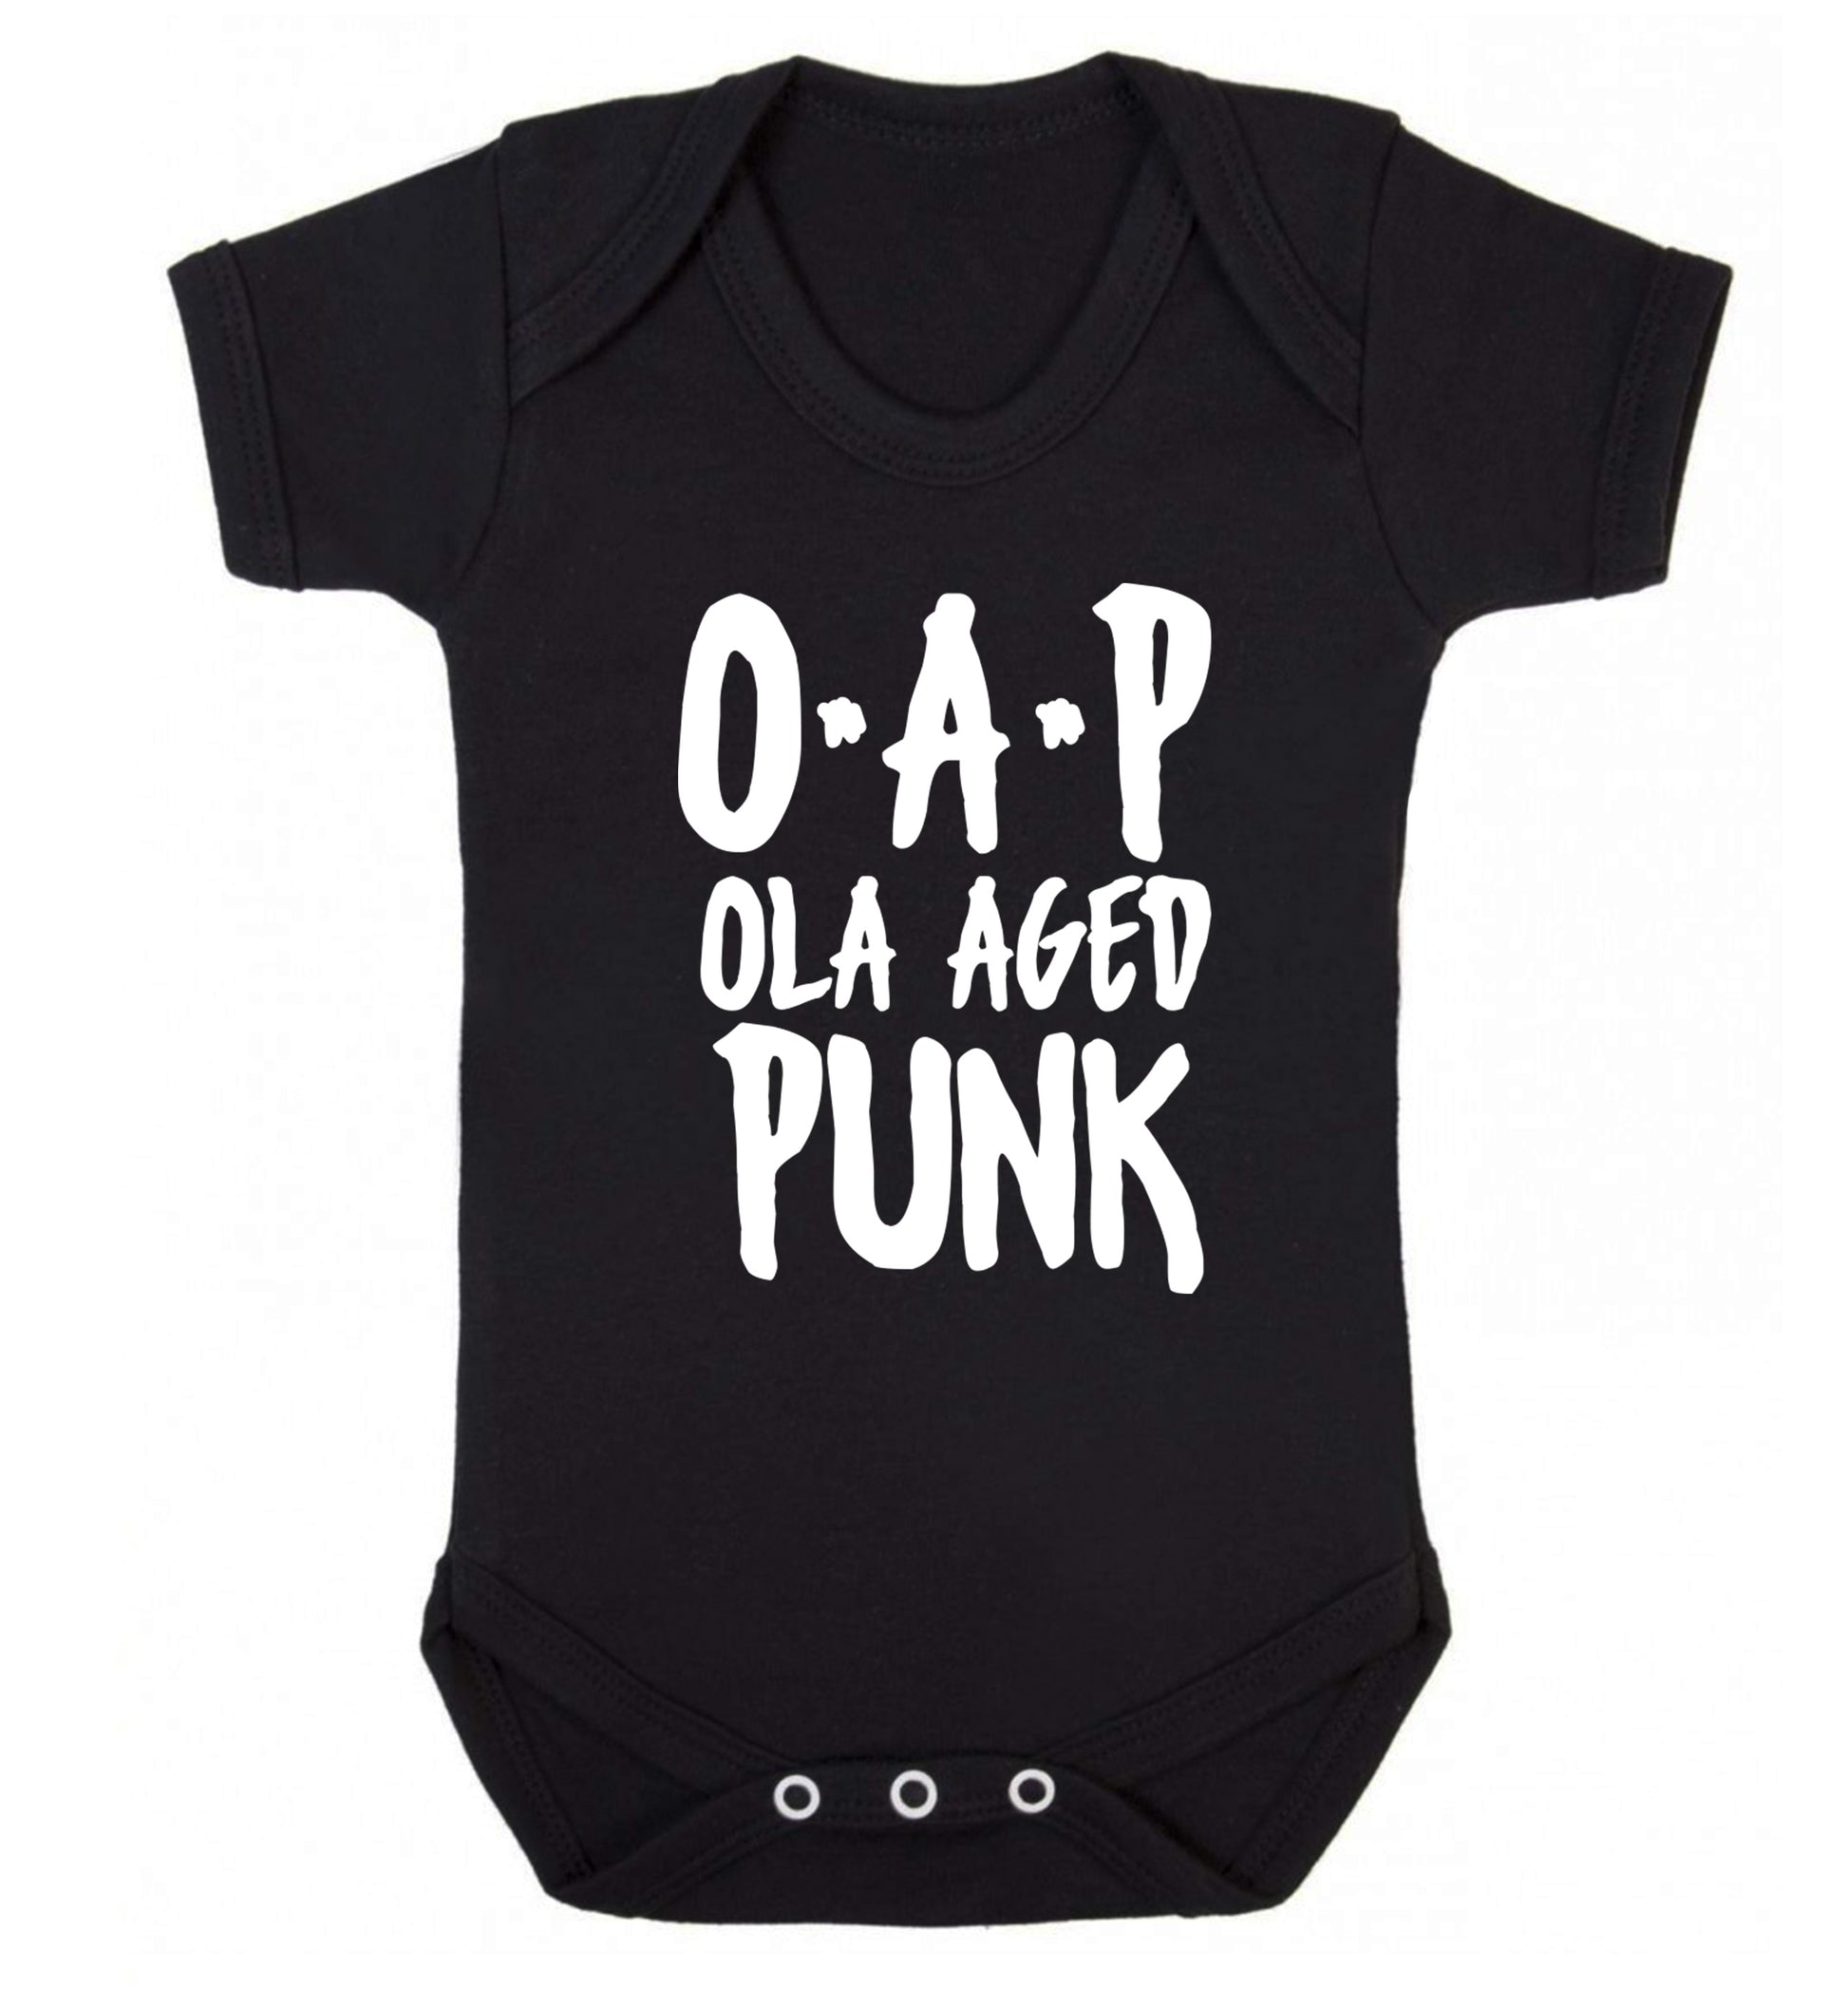 O.A.P Old Aged Punk Baby Vest black 18-24 months